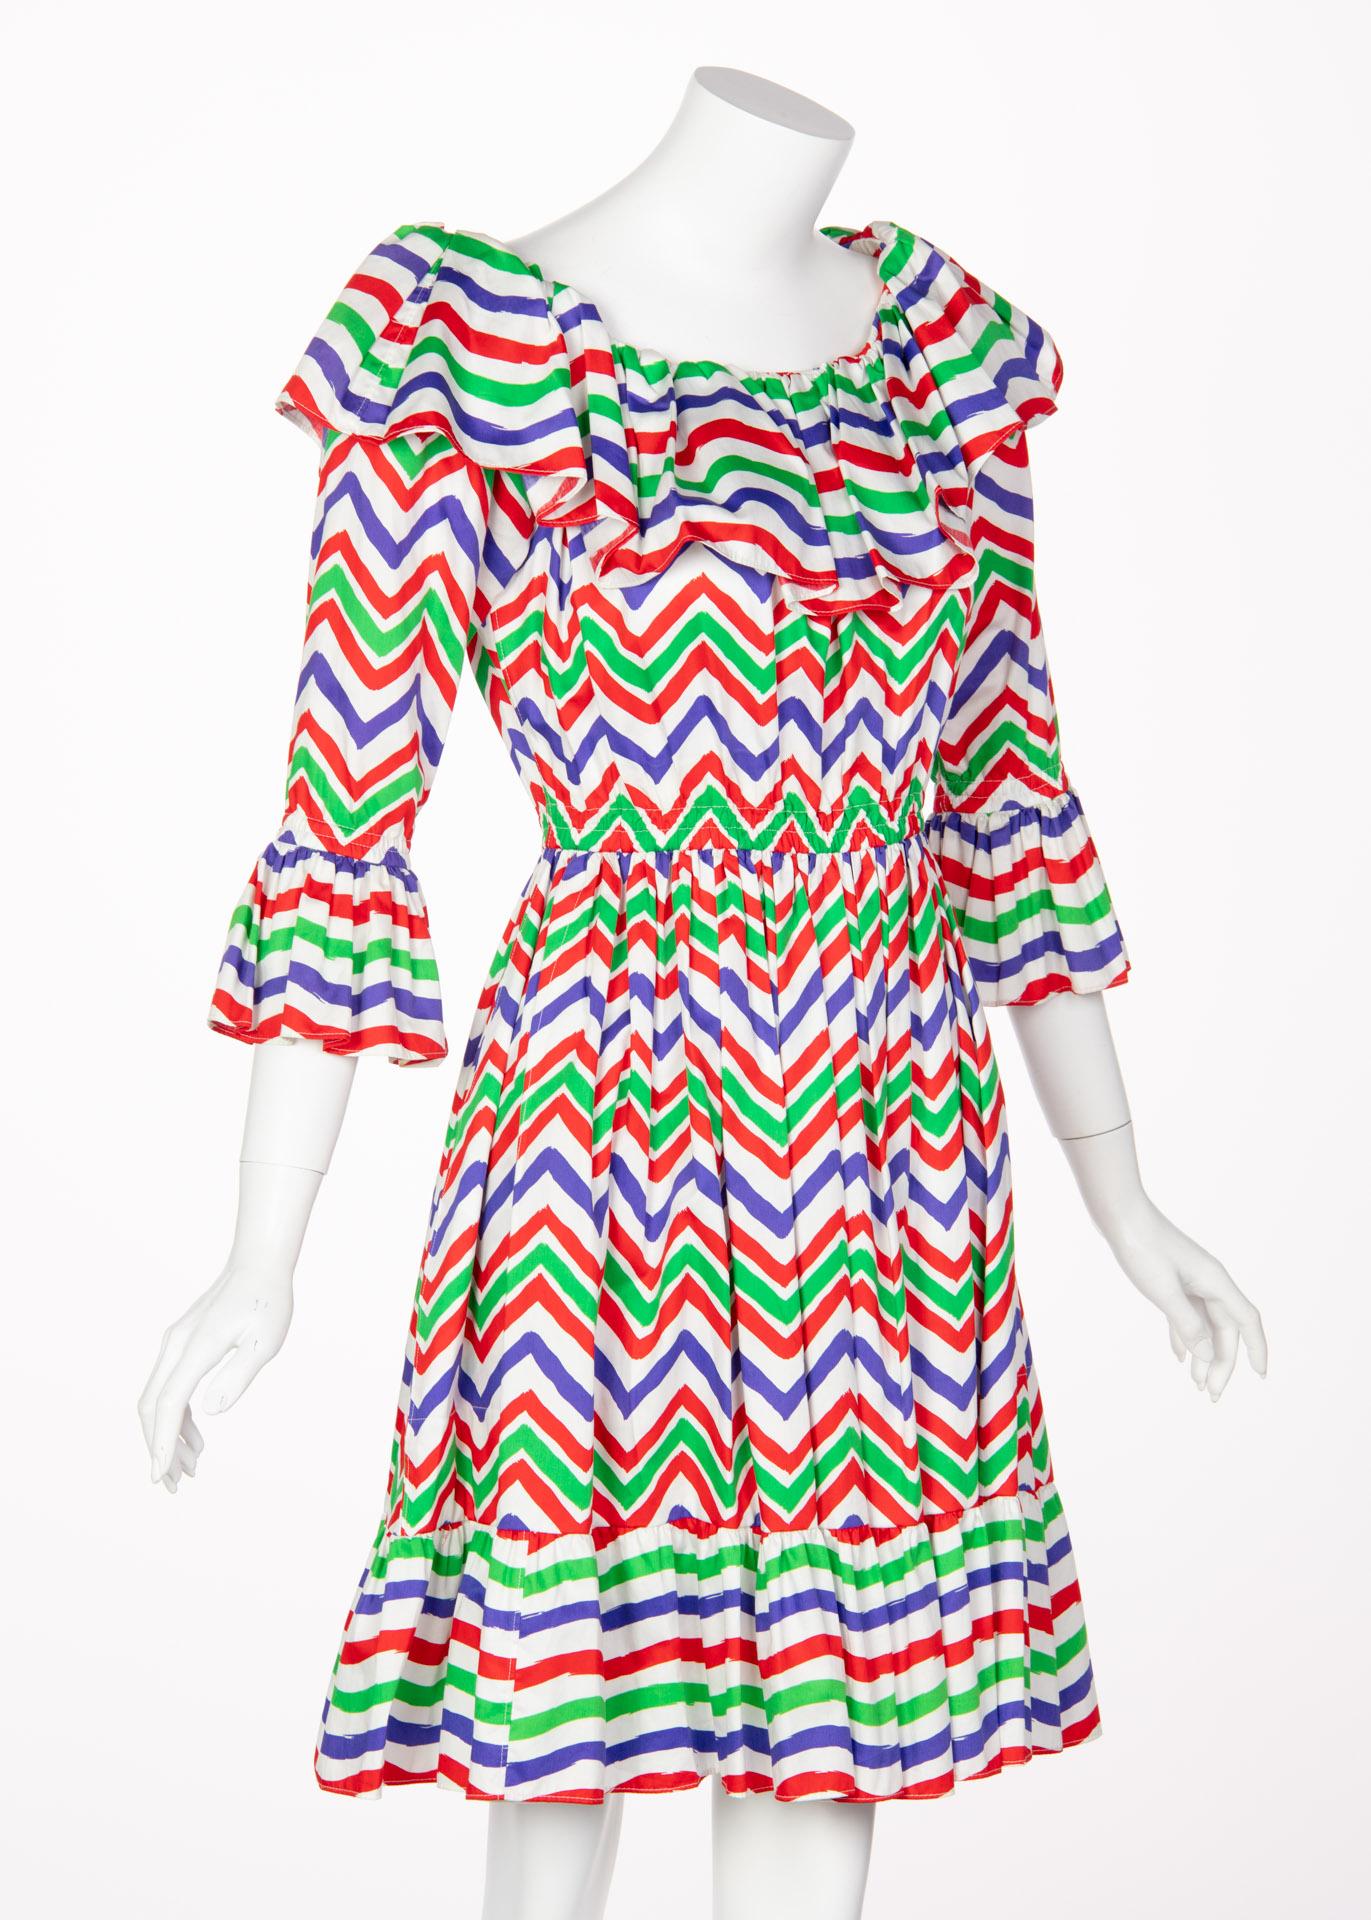 Yves Saint Laurent YSL Cotton Print Flamenco Dress, 1970s  In Excellent Condition For Sale In Boca Raton, FL